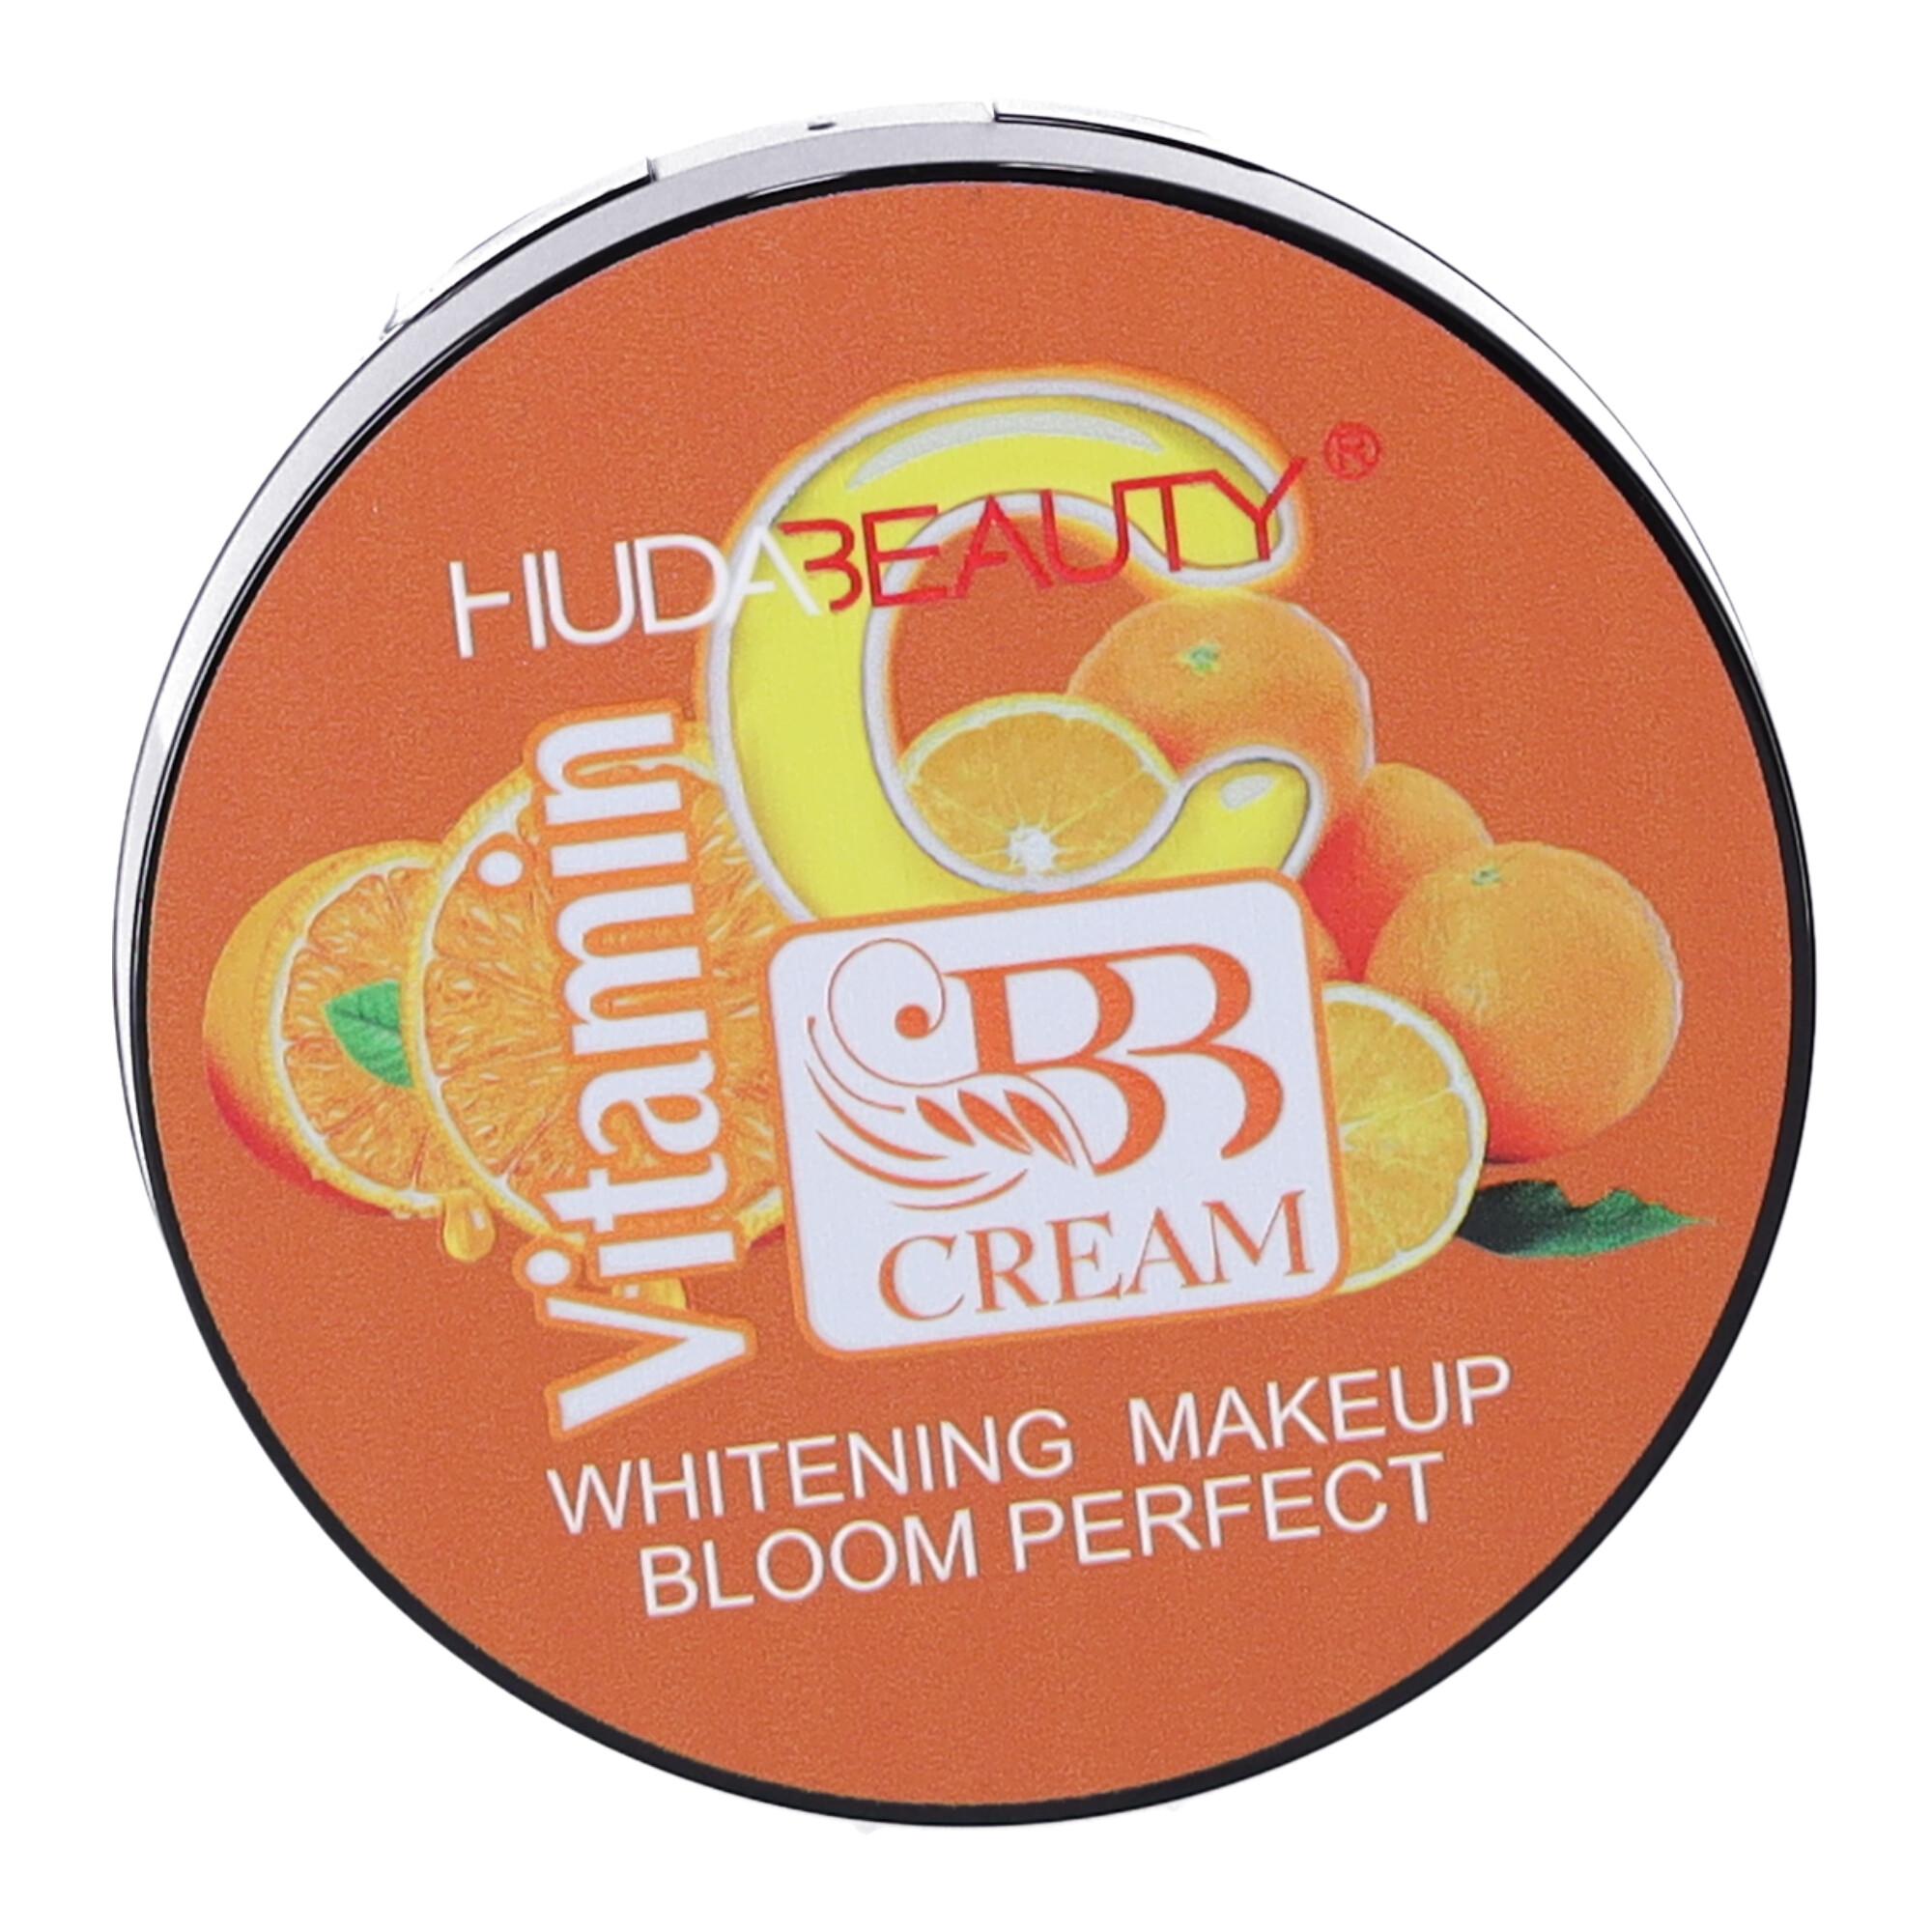 BB Air Cushion HUDABEAUTY cream # 130 - PANNA COTTA shade